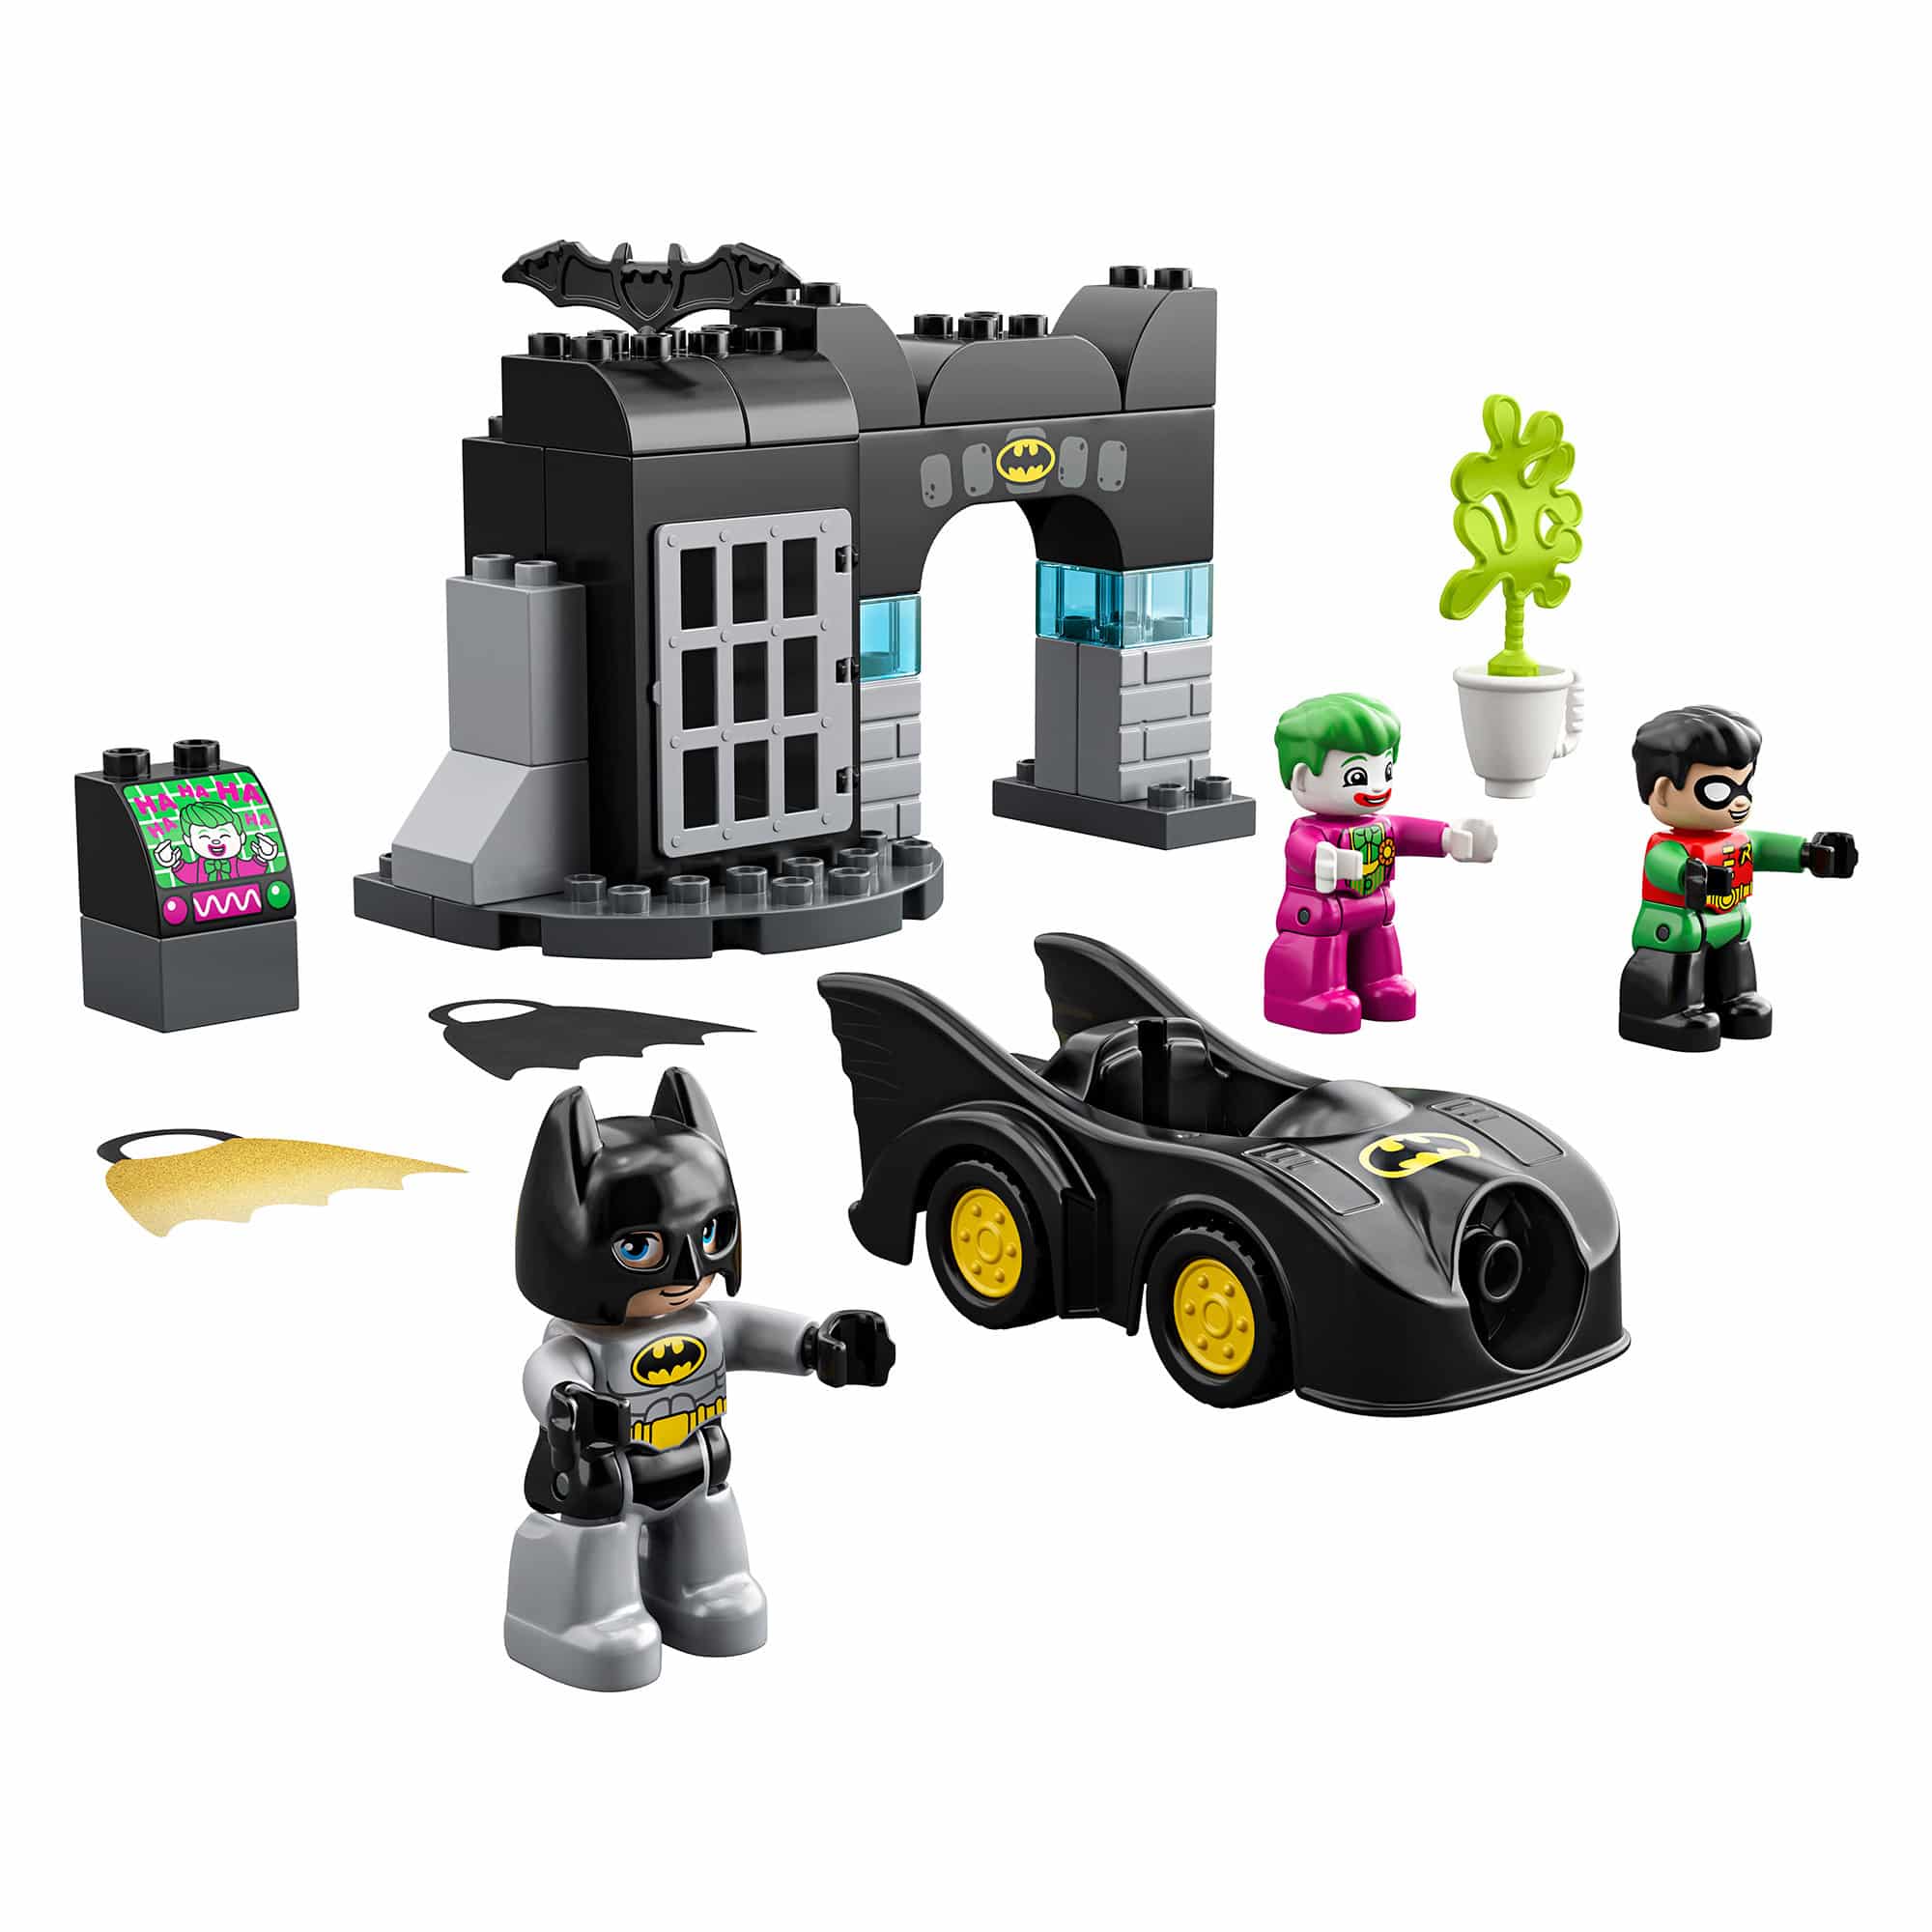 LEGO DUPLO 10919 - Batcave